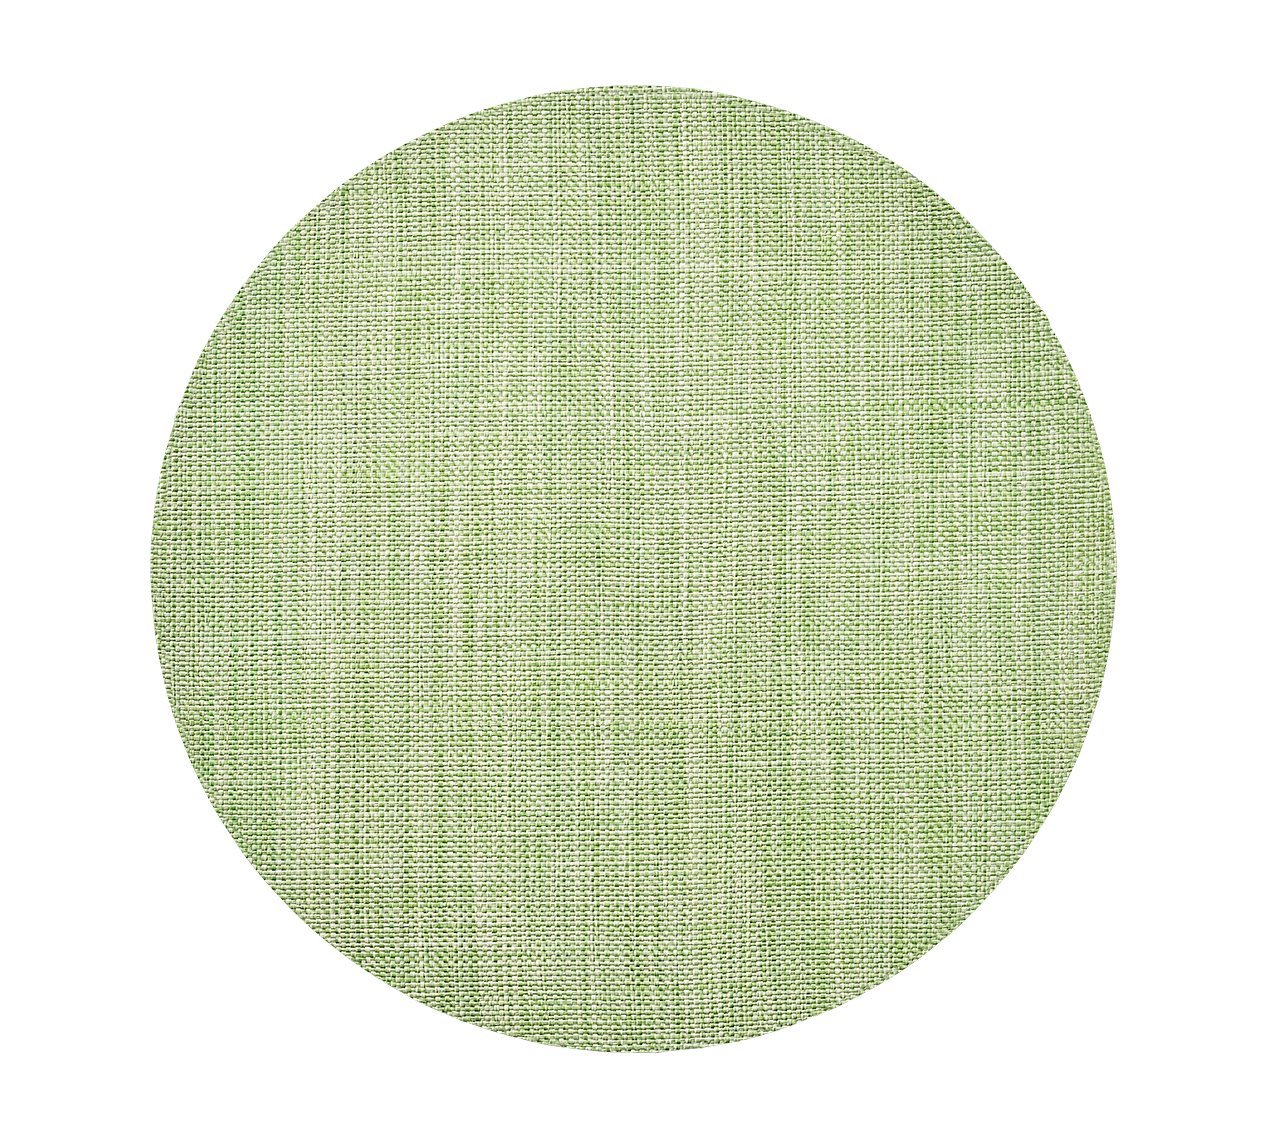 Portofino Placemat in Green, Set of 4 by Kim Seybert 